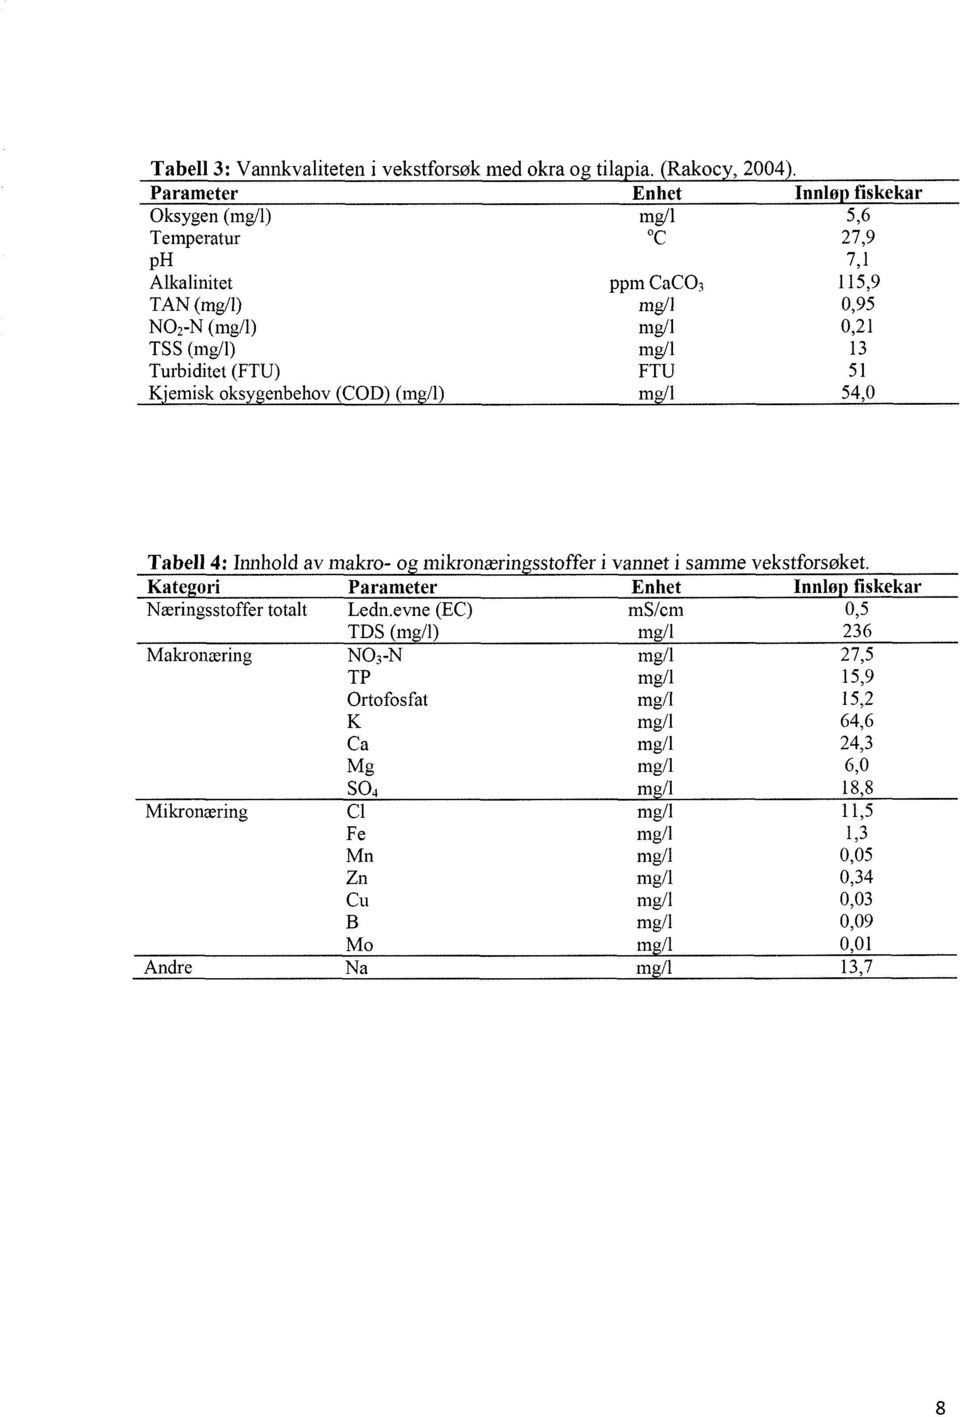 Alkalinitet ppm CaCO3 115,9 TAN (mg/1) mg/1 0,95 NO2-N (mg/1) rng/1 0,21 TSS (mg/1) mg/1 13